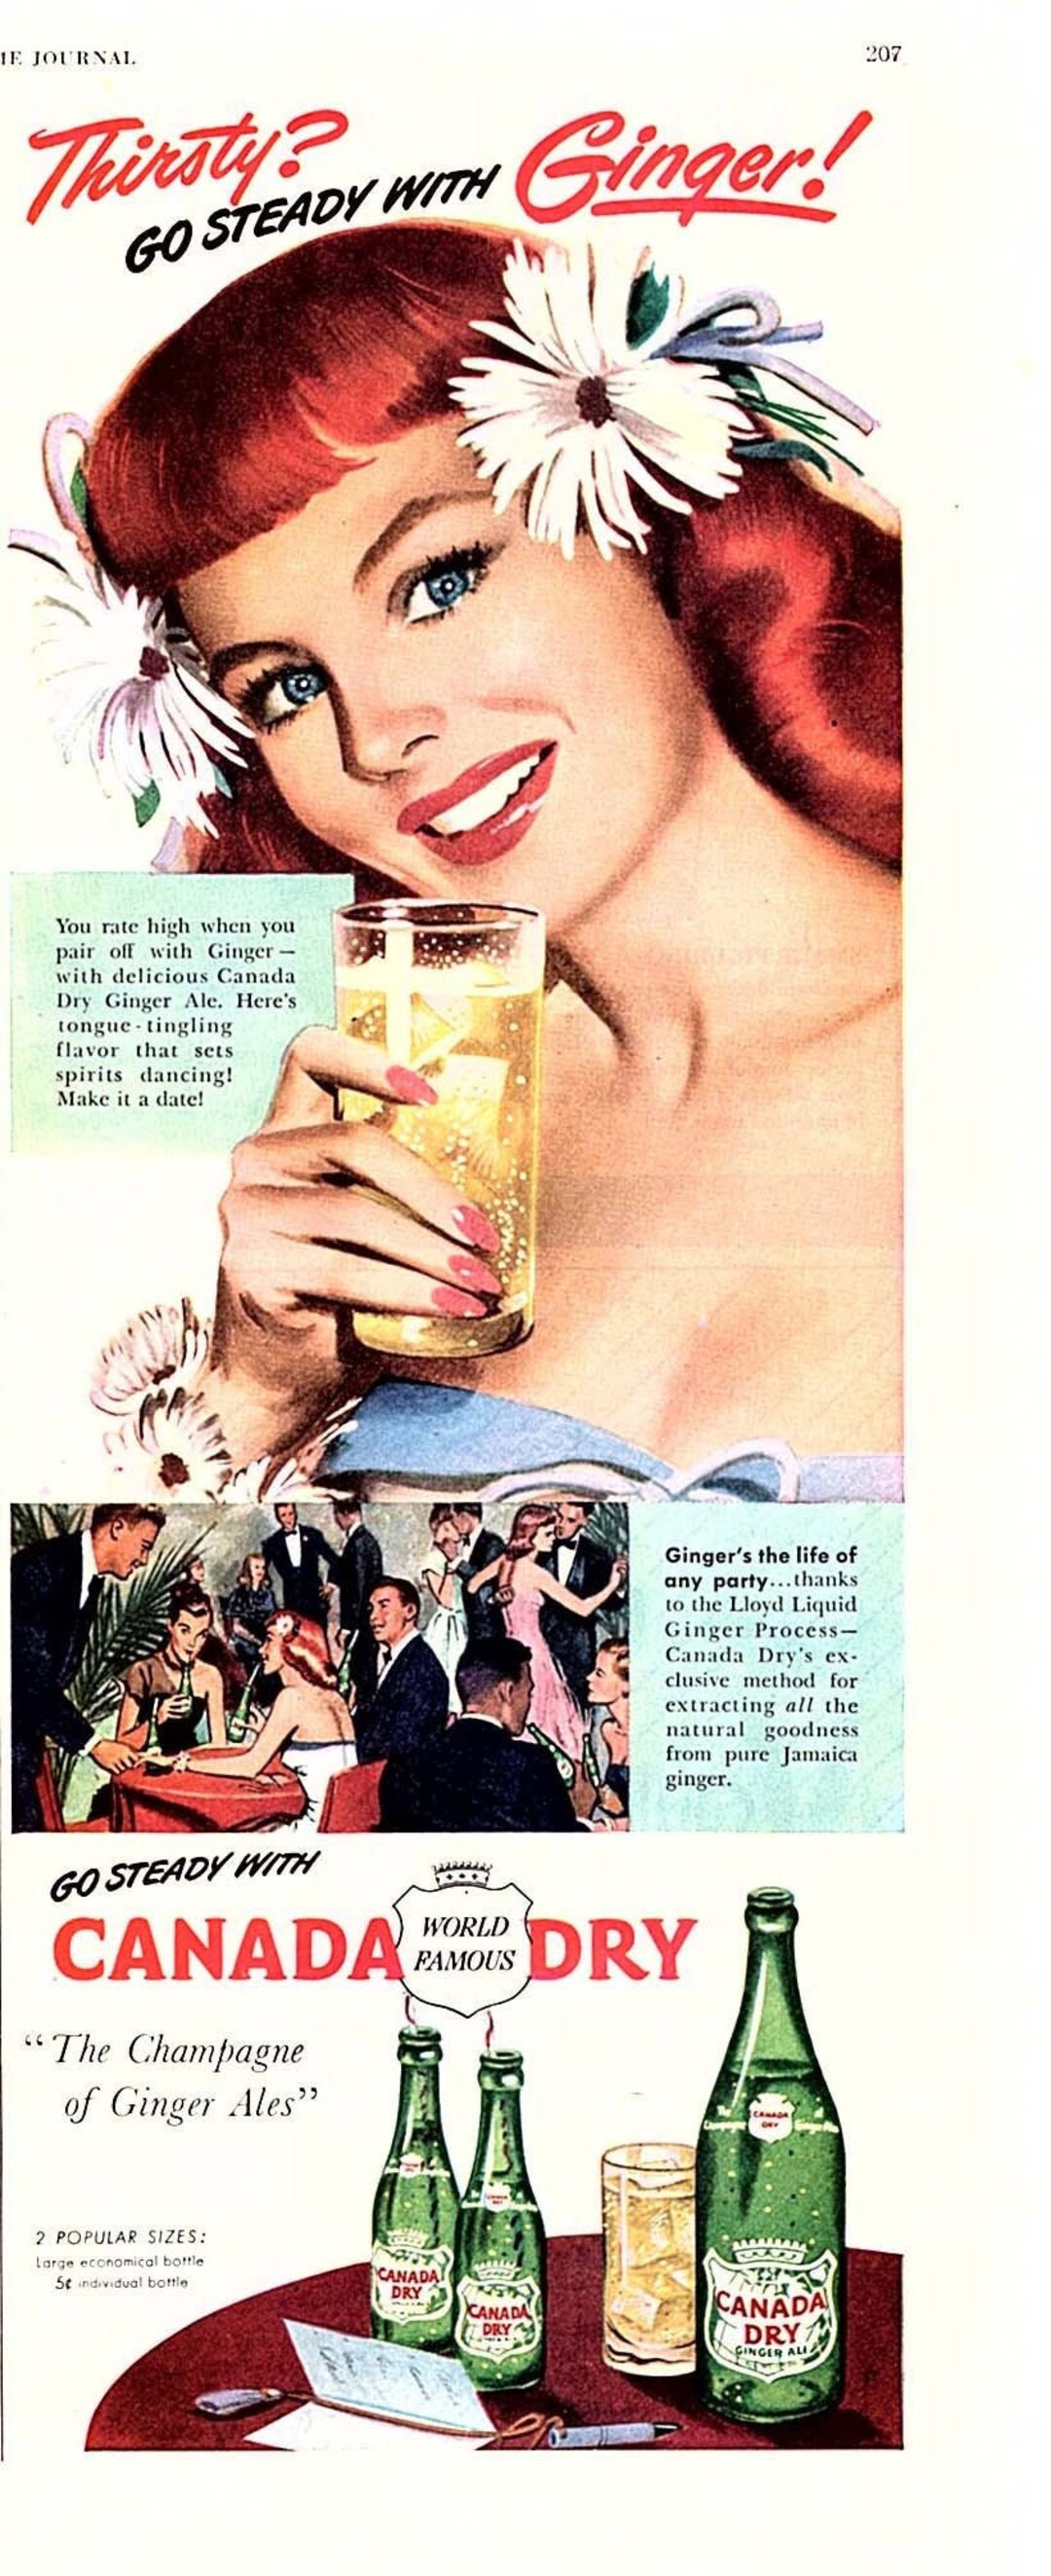  1957 Vintage Lingerie Ad for Maidenform Bra - I